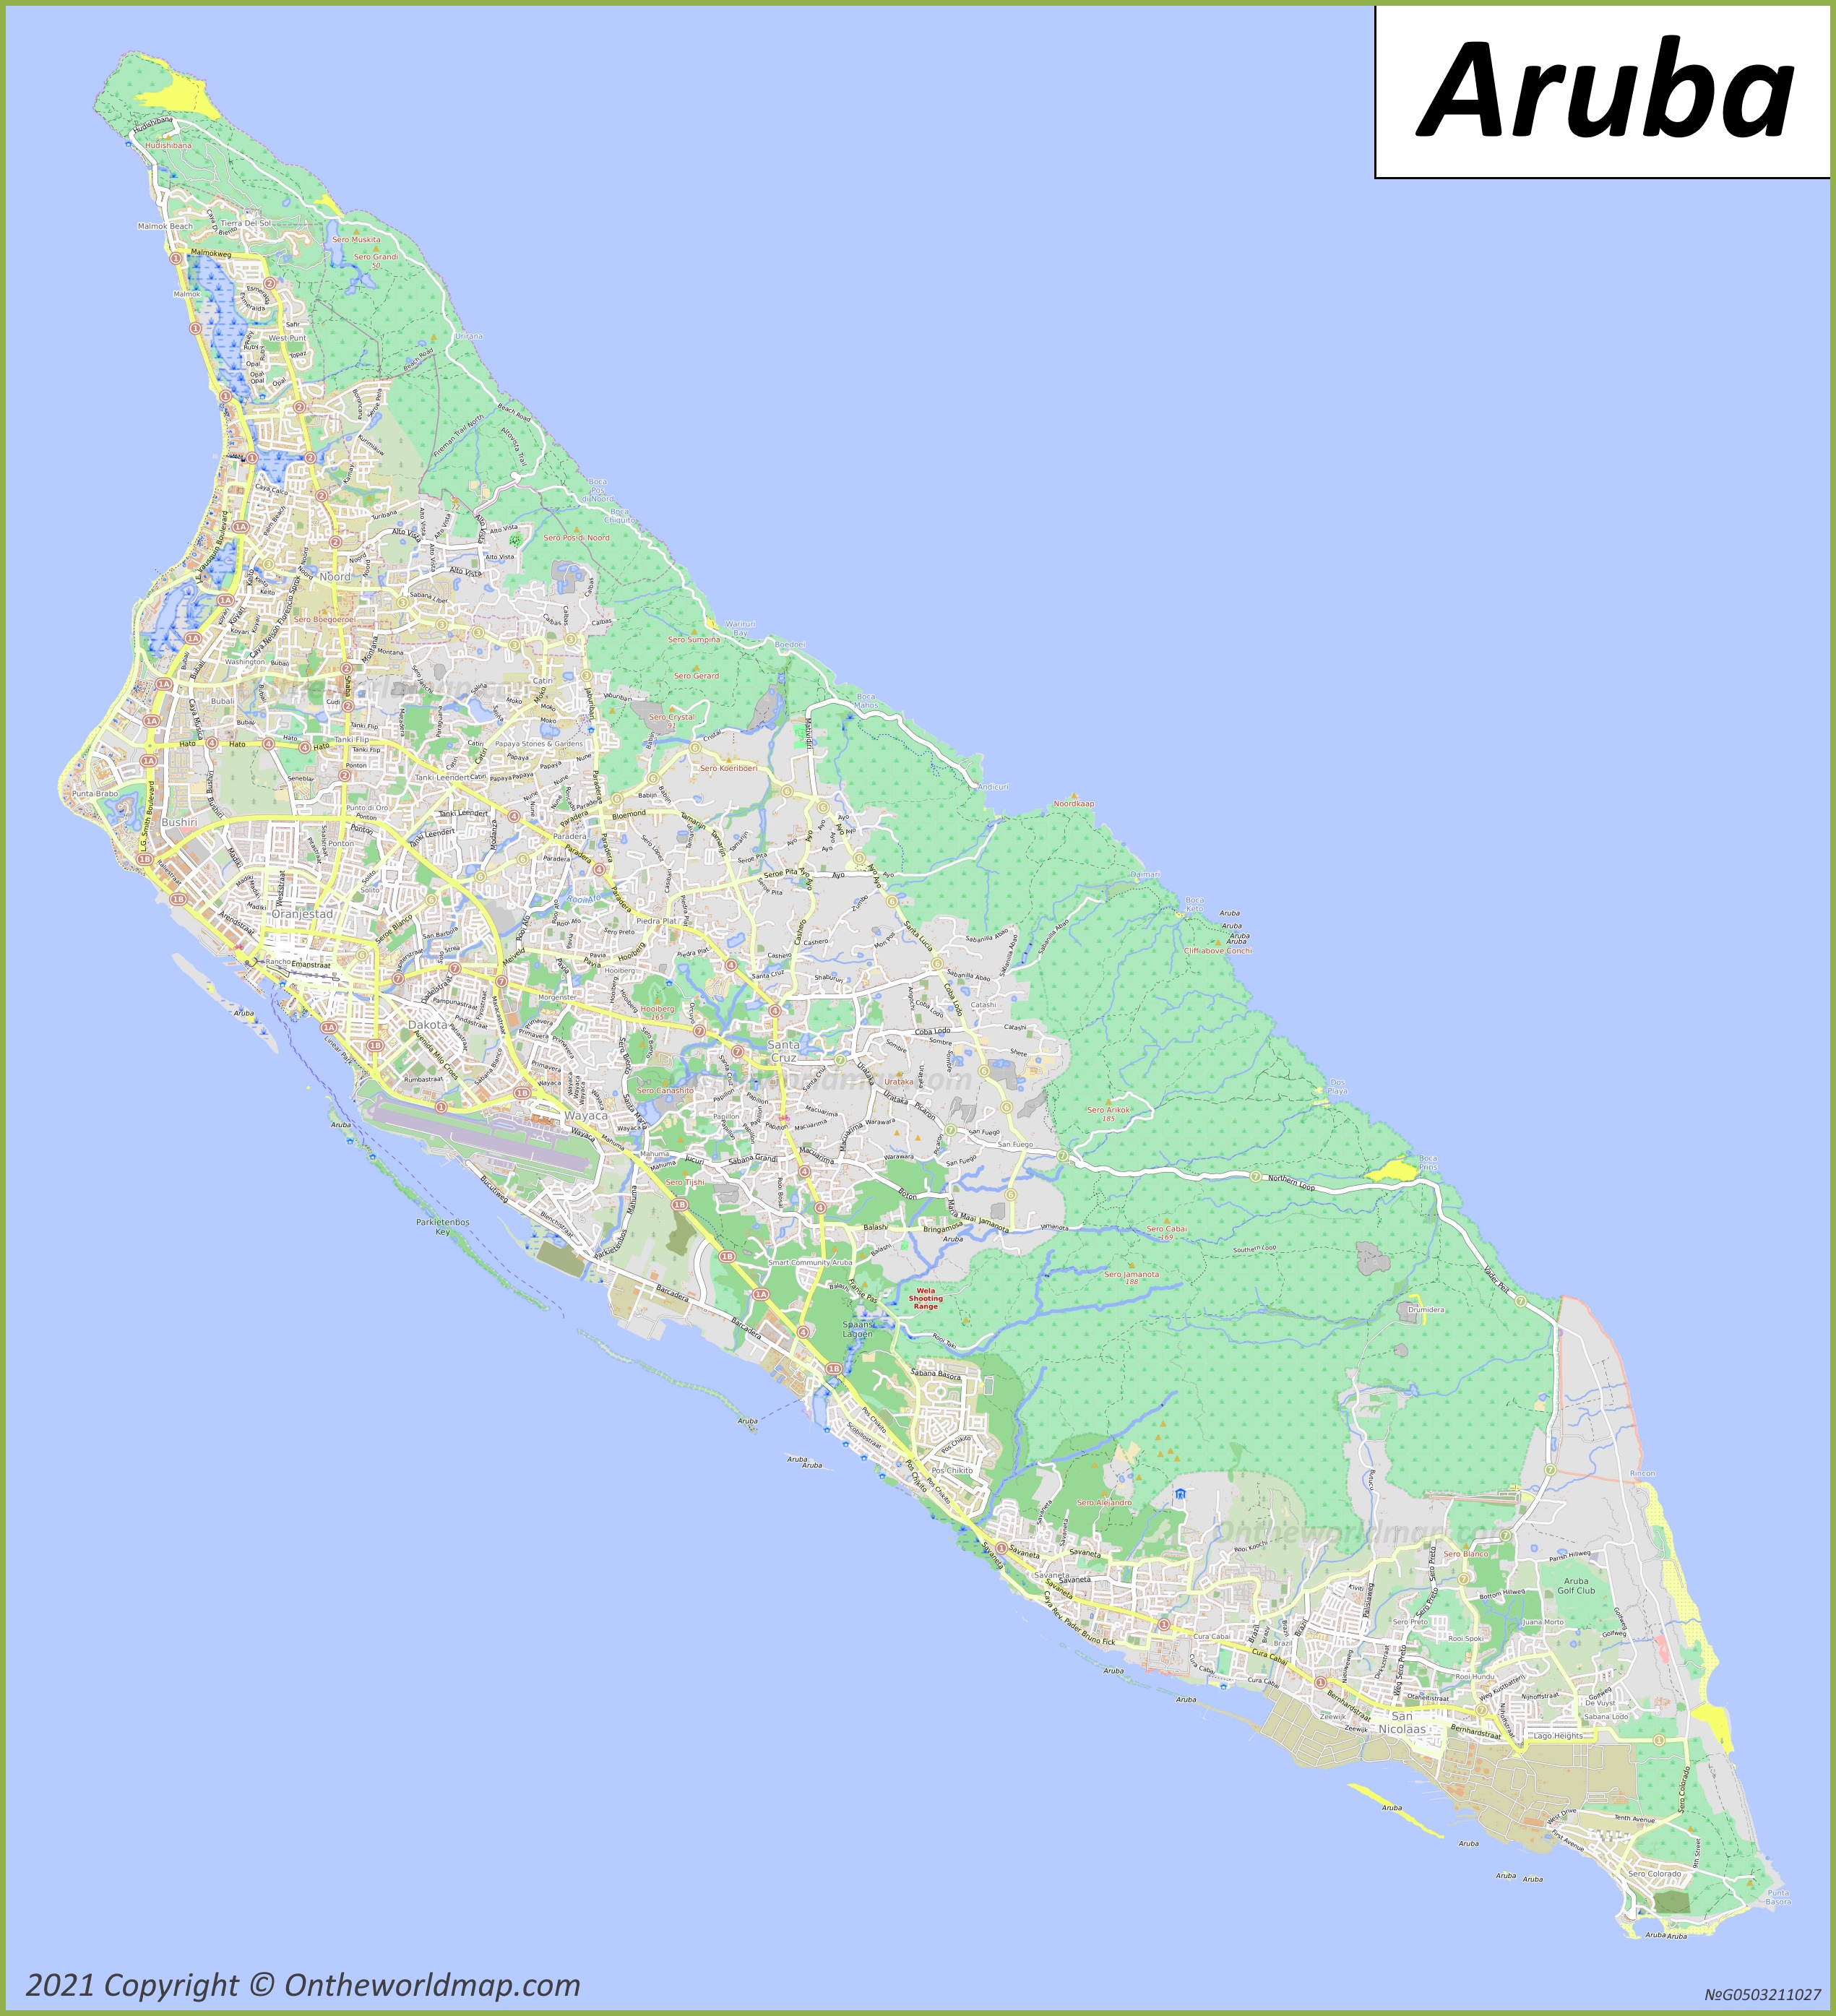 Detailed Map of Aruba Island